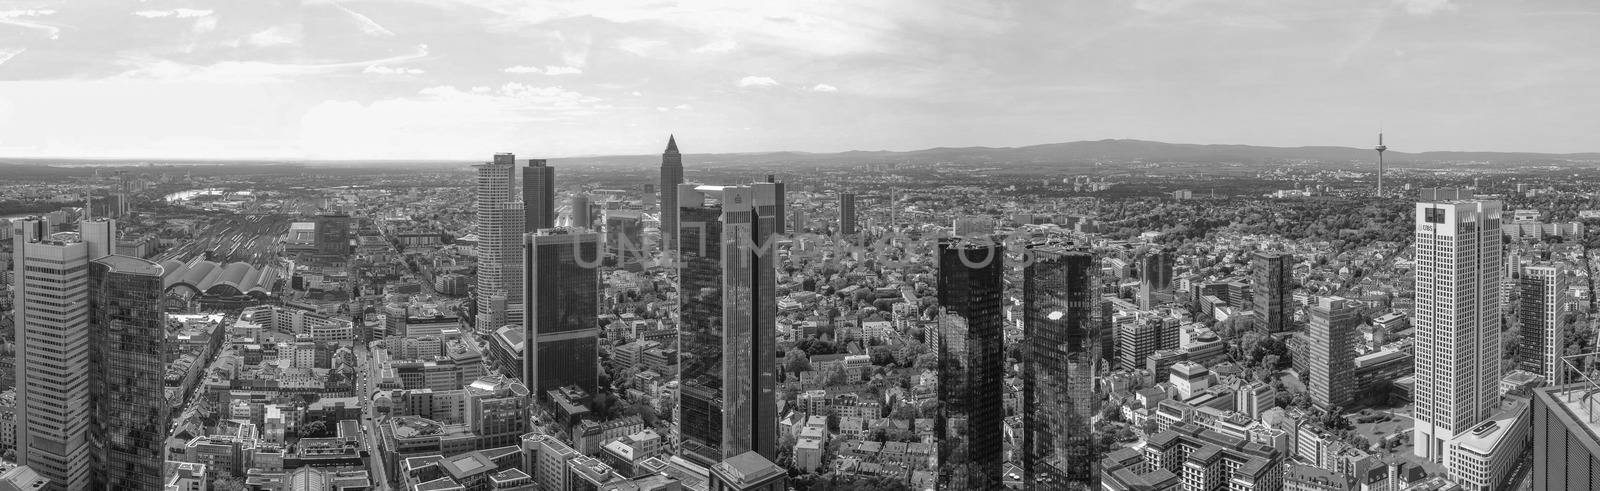 Frankfurt am Main panorama by claudiodivizia